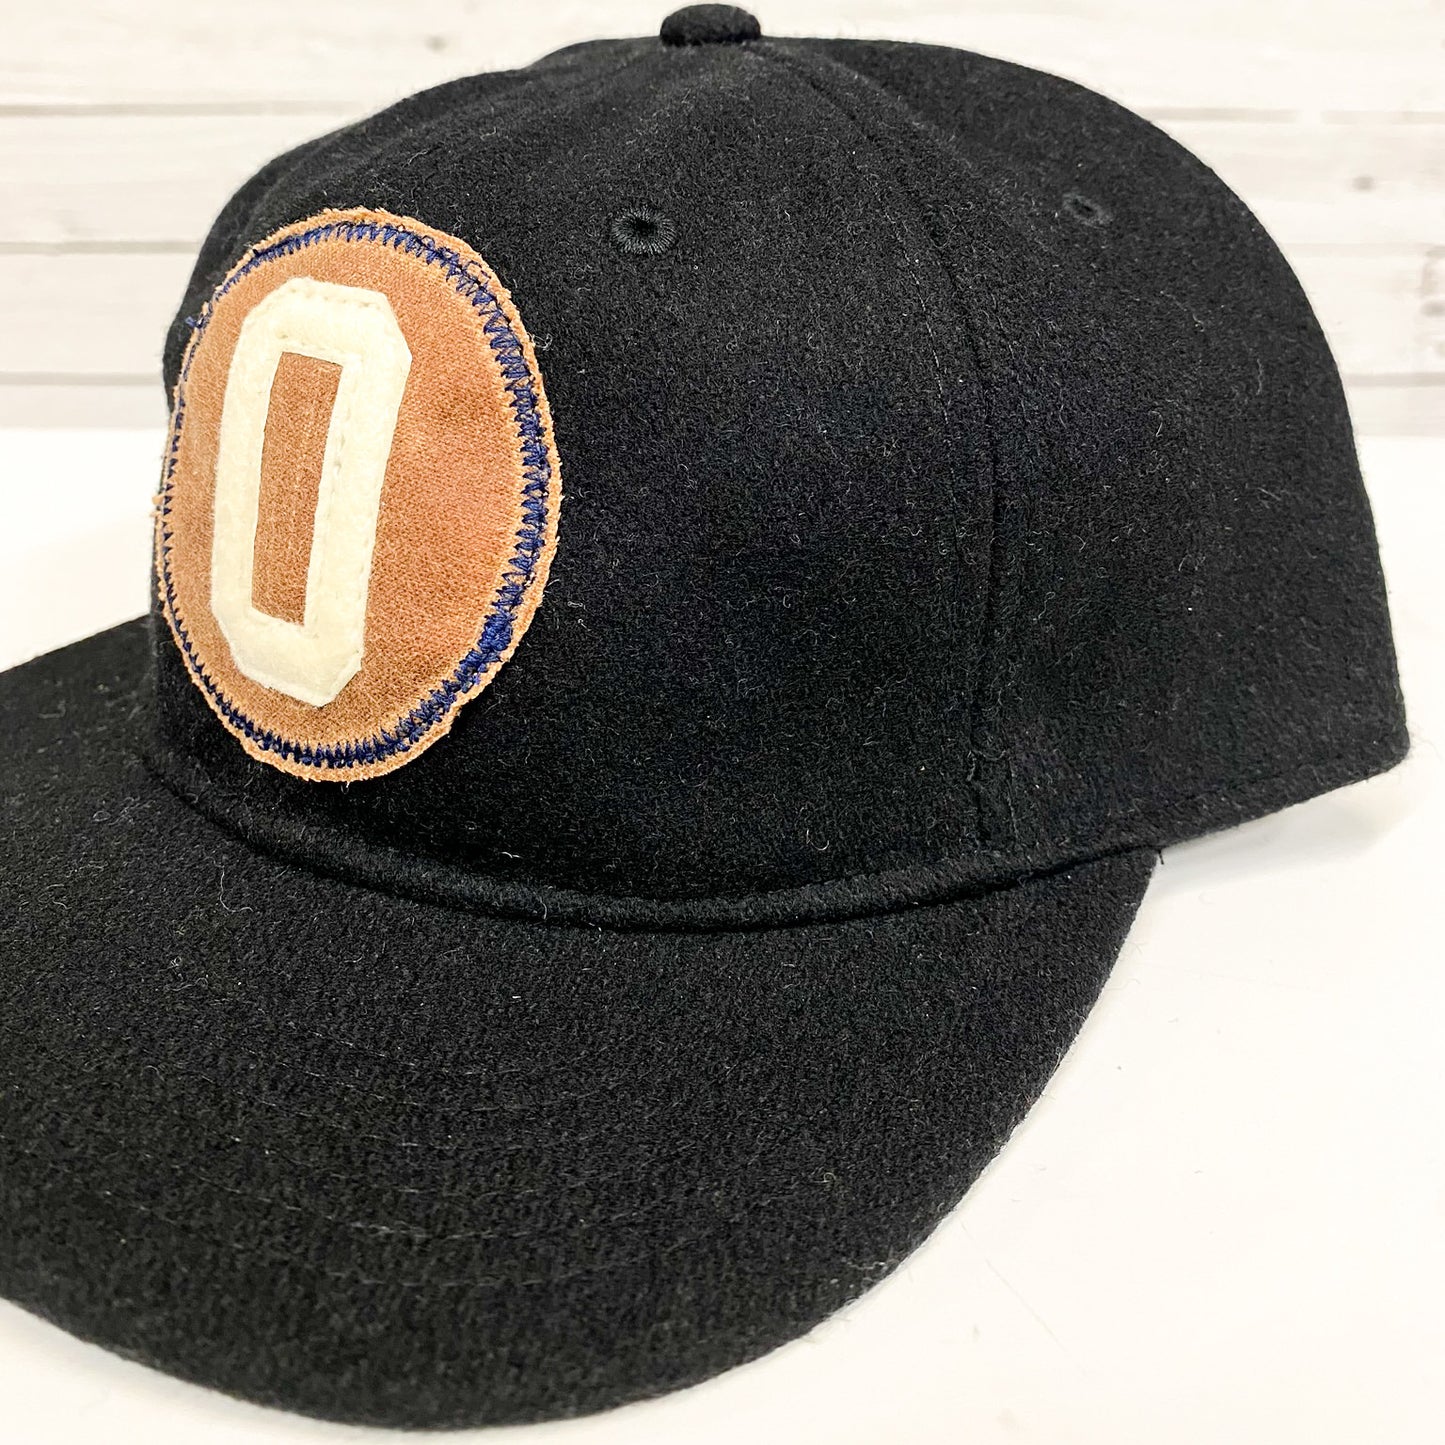 Handmade "O" Wax Canvas Patch Wool Blend Hat